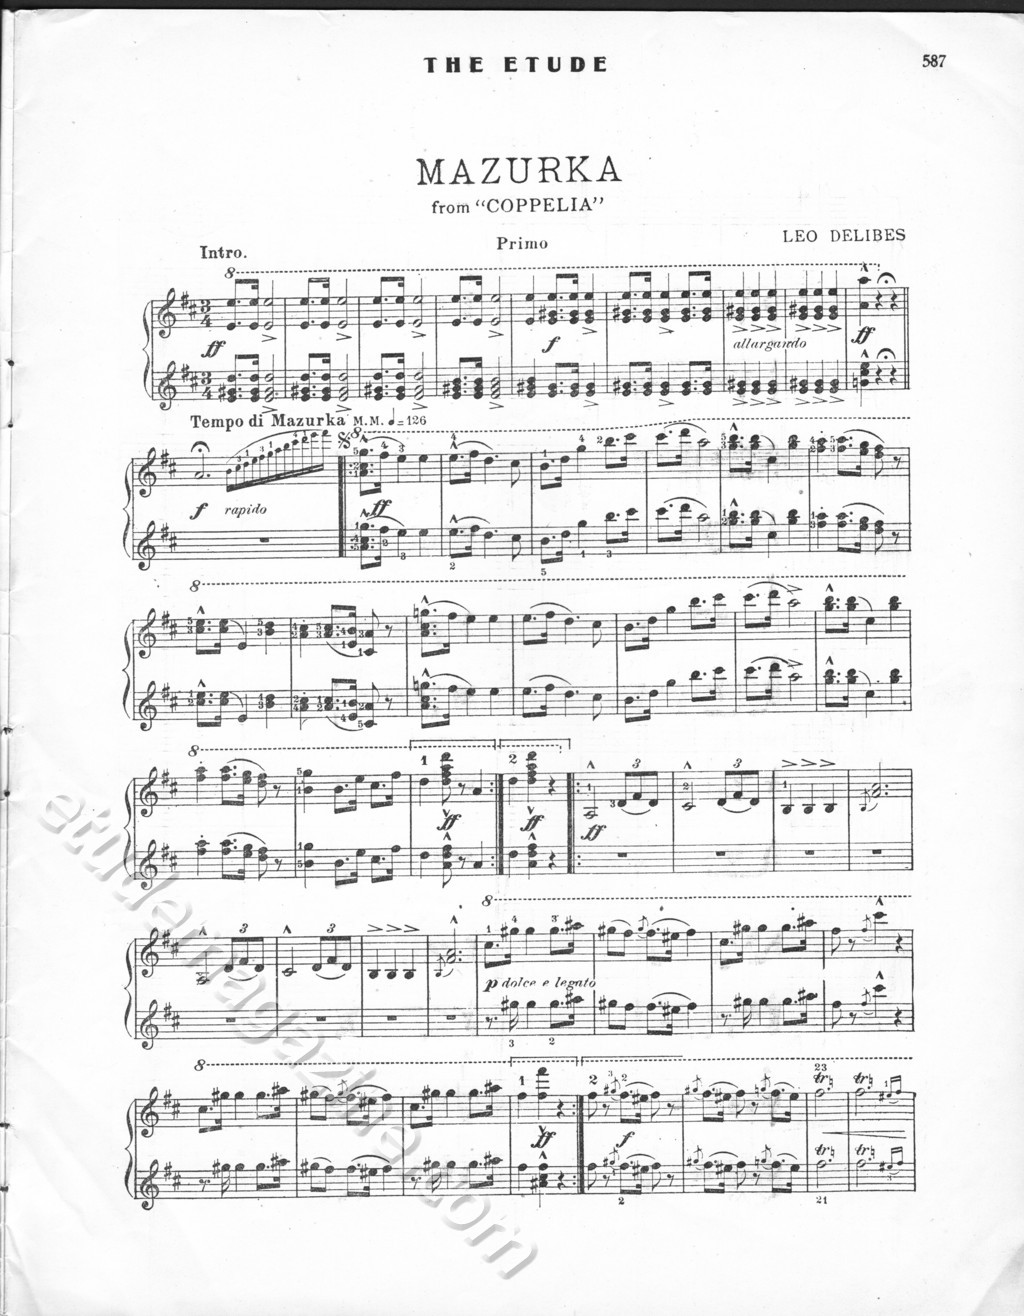 Mazurka from "Coppelia". Leo Delibes.